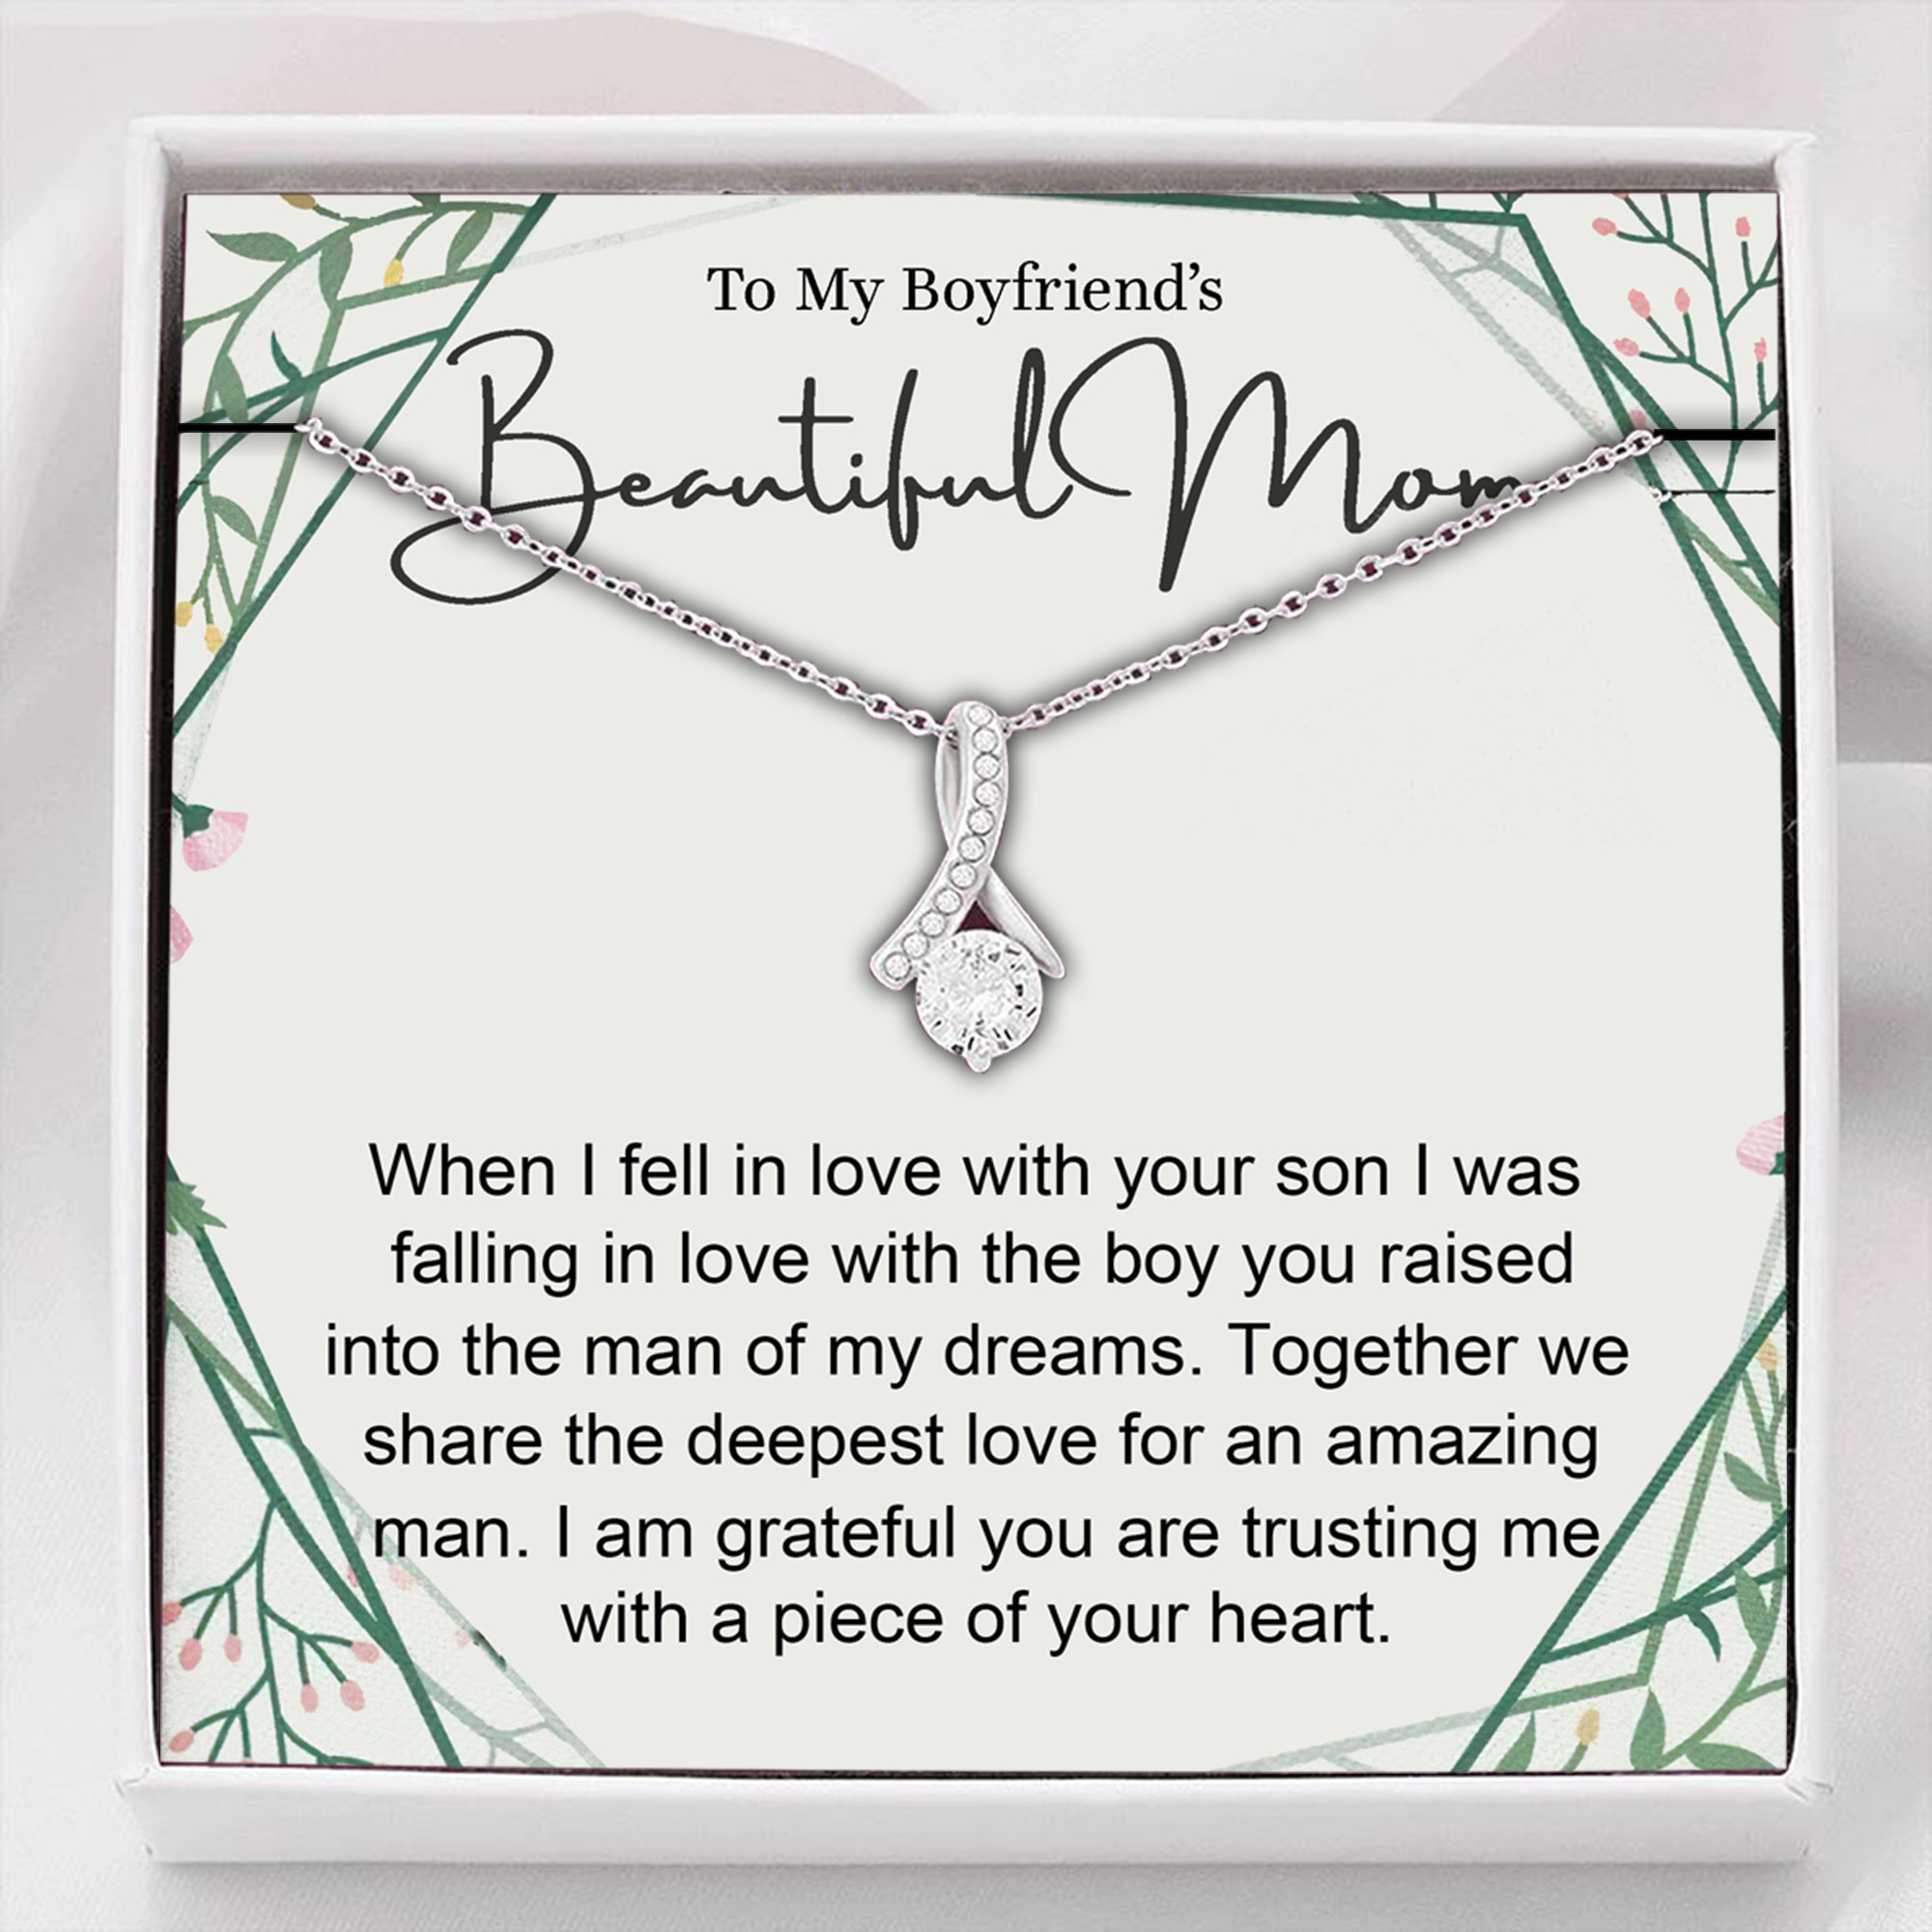 Boyfriend's Mom Necklace, Gift For Boyfriend's Mom, To My Boyfriends Mom Necklace